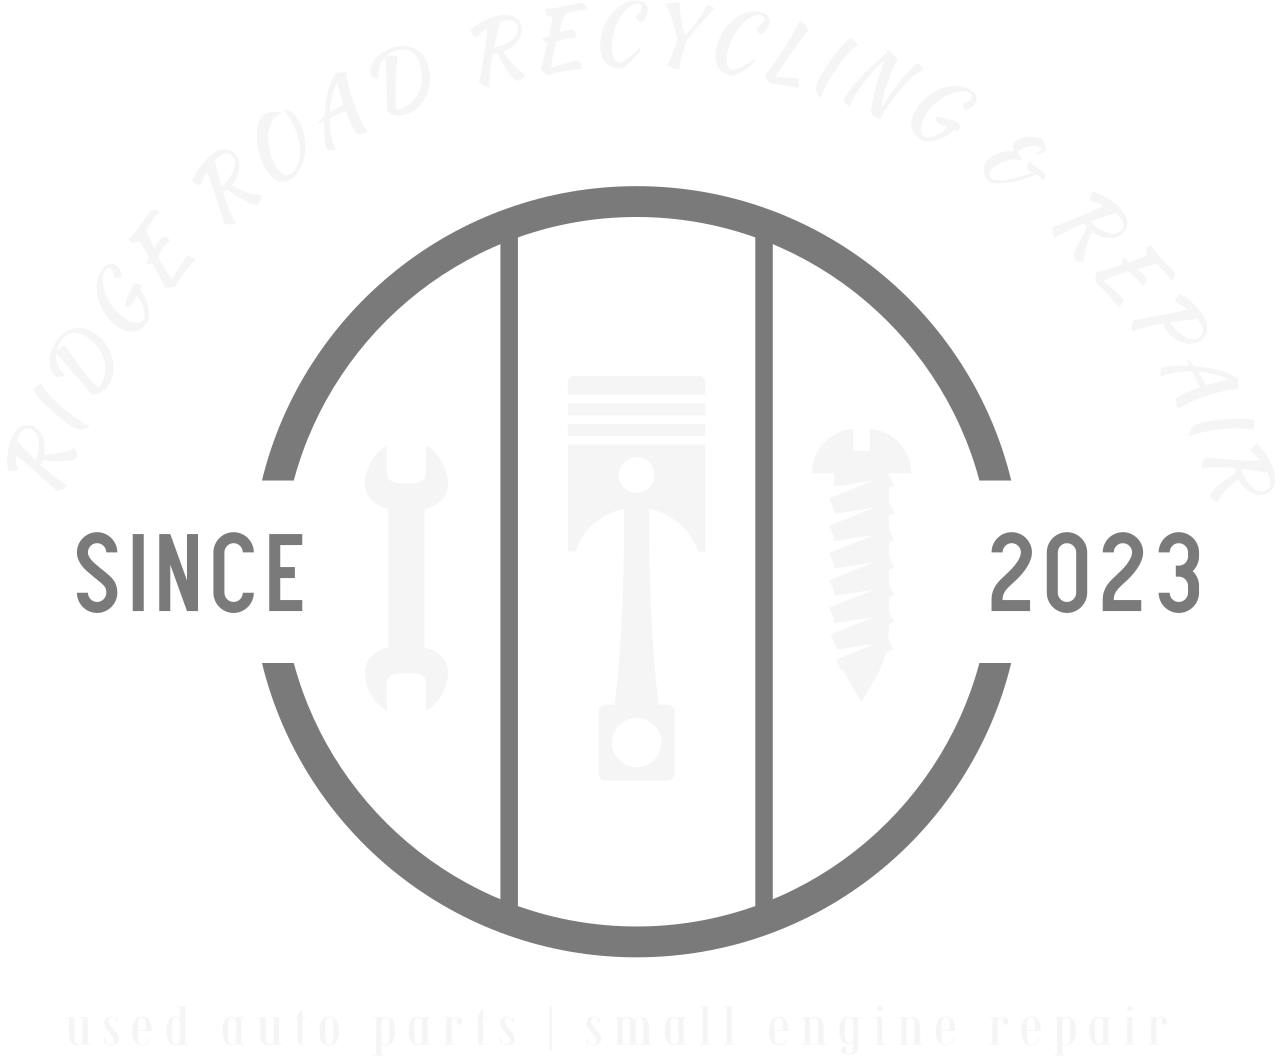 RIDGE ROAD RECYCLING & REPAIR's logo